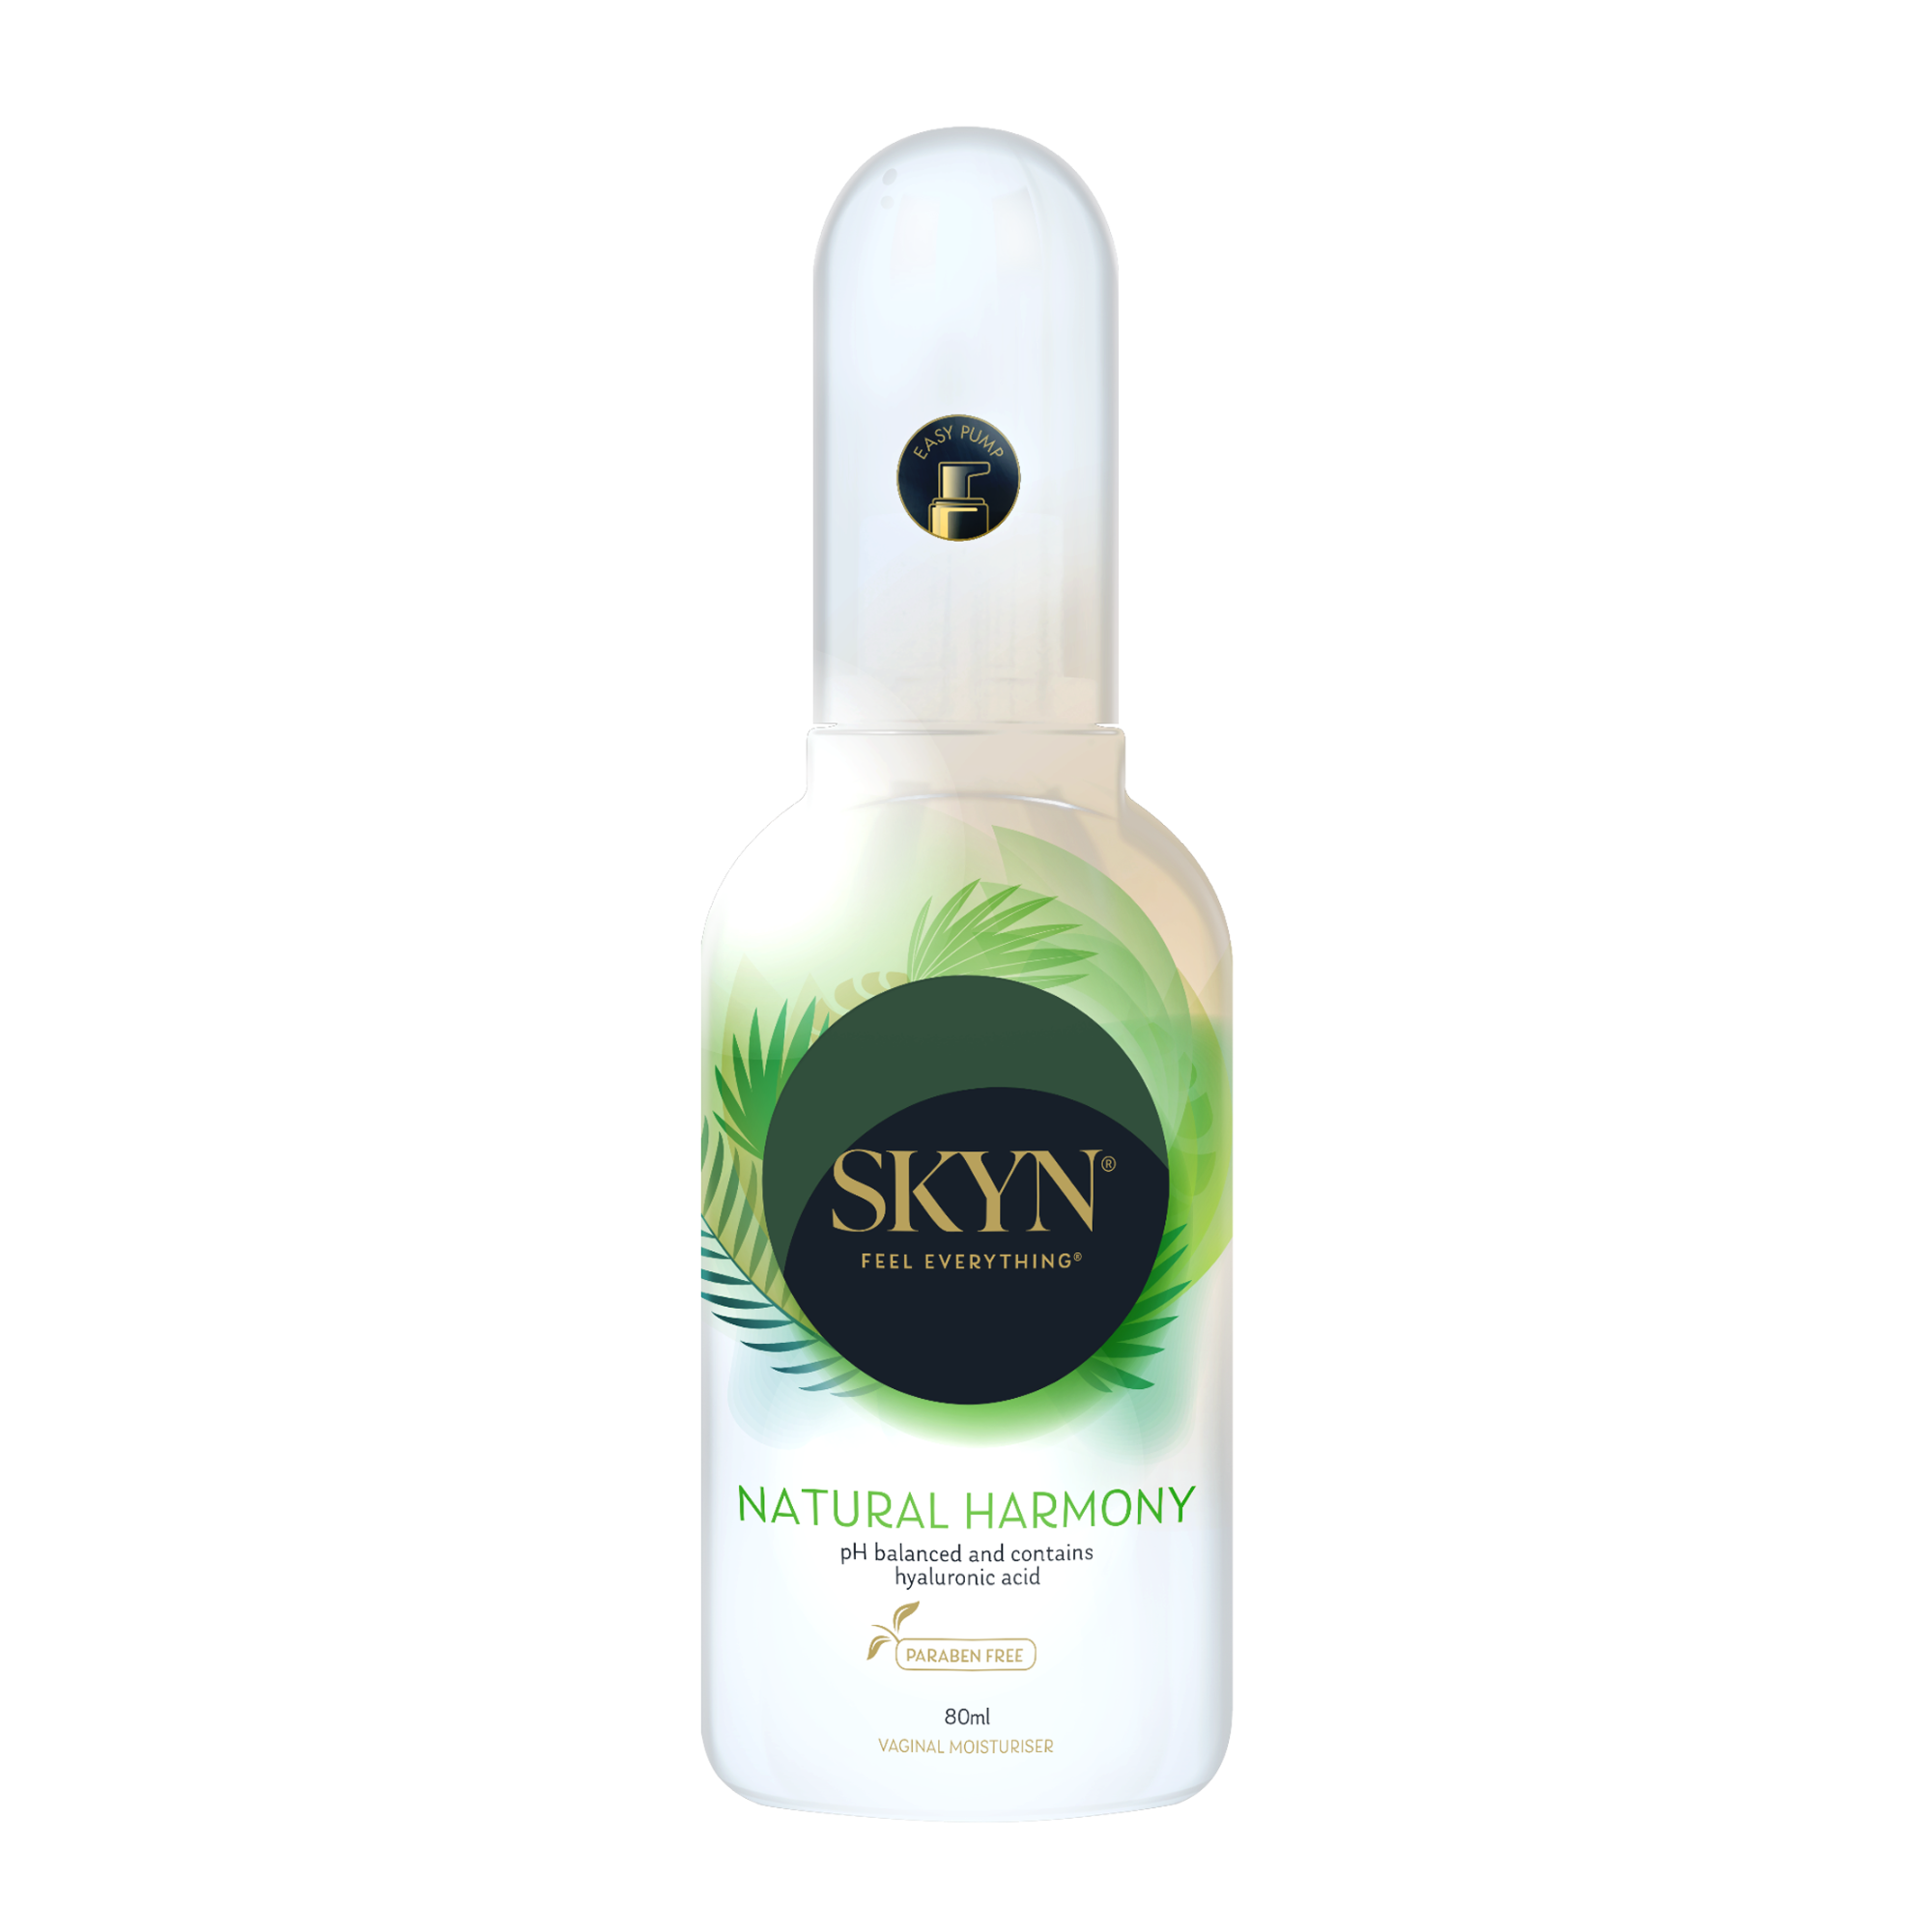 SKYN® Caress Clitoris Stimulator + Natural Harmony Gel 80ml